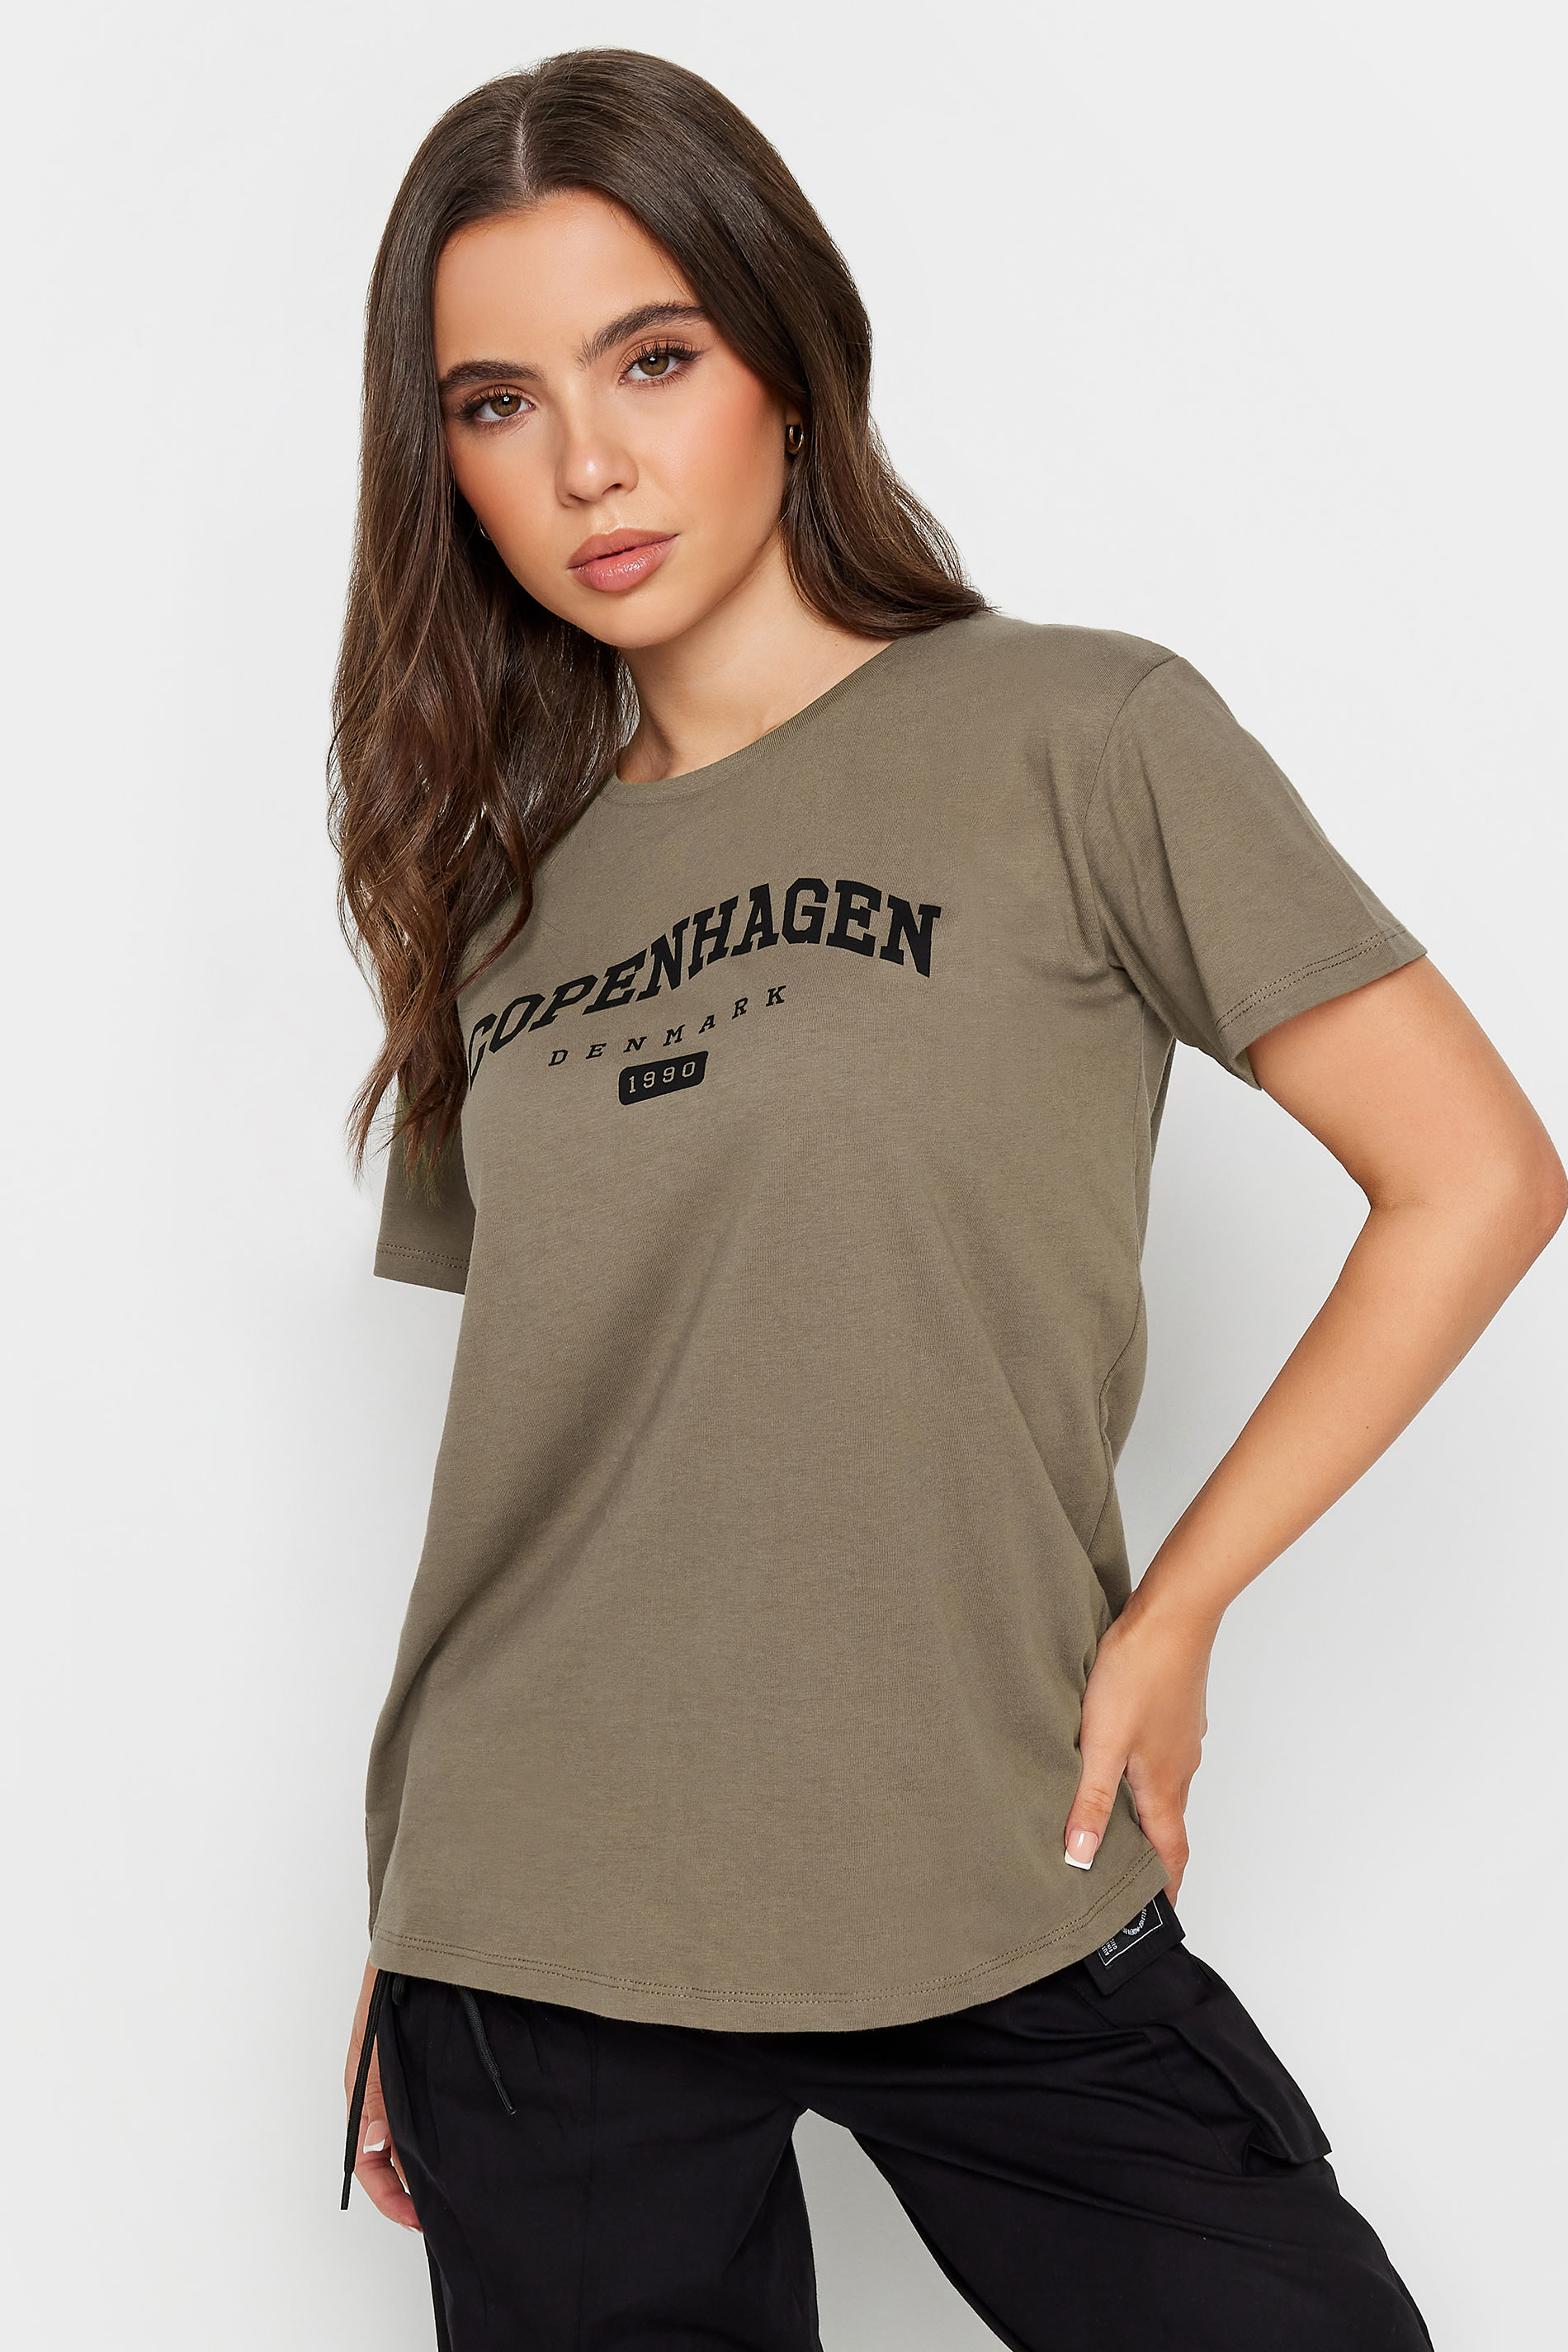 PixieGirl 2 PACK Black & Brown 'Copenhagen' Slogan T-Shirts | PixieGirl  2